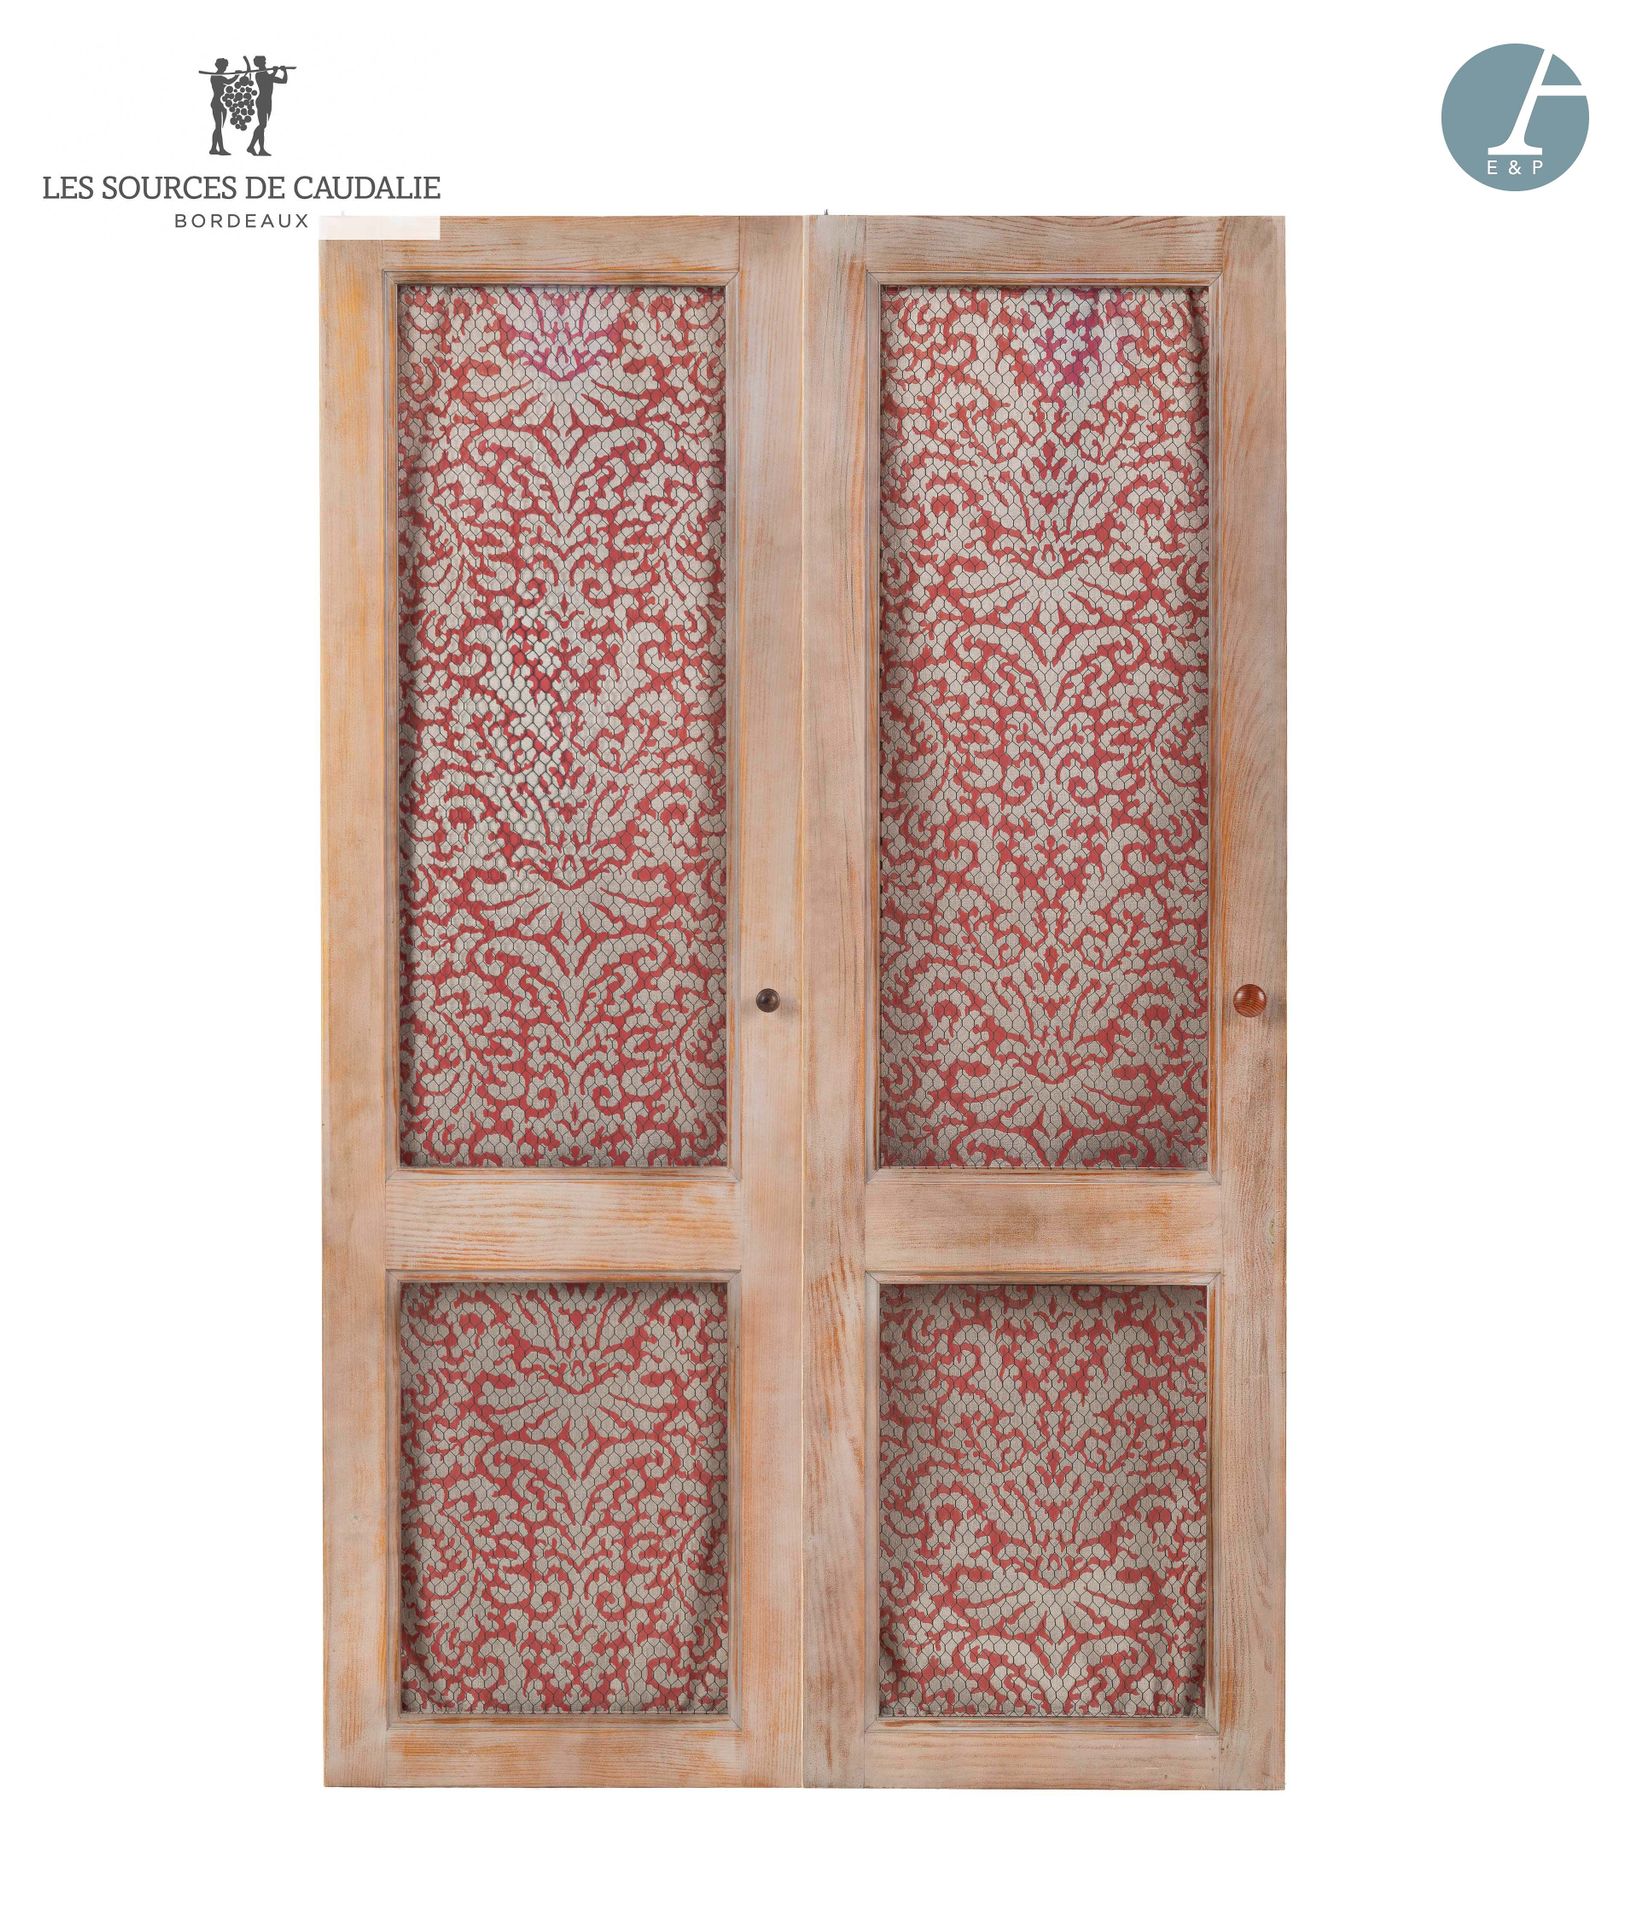 Null 源自Caudalie "Les Cépages"（Maison du Lièvre）的26号房间。
一对天然木质的橱柜门，红色和灰色的羊绒图案的织物背&hellip;